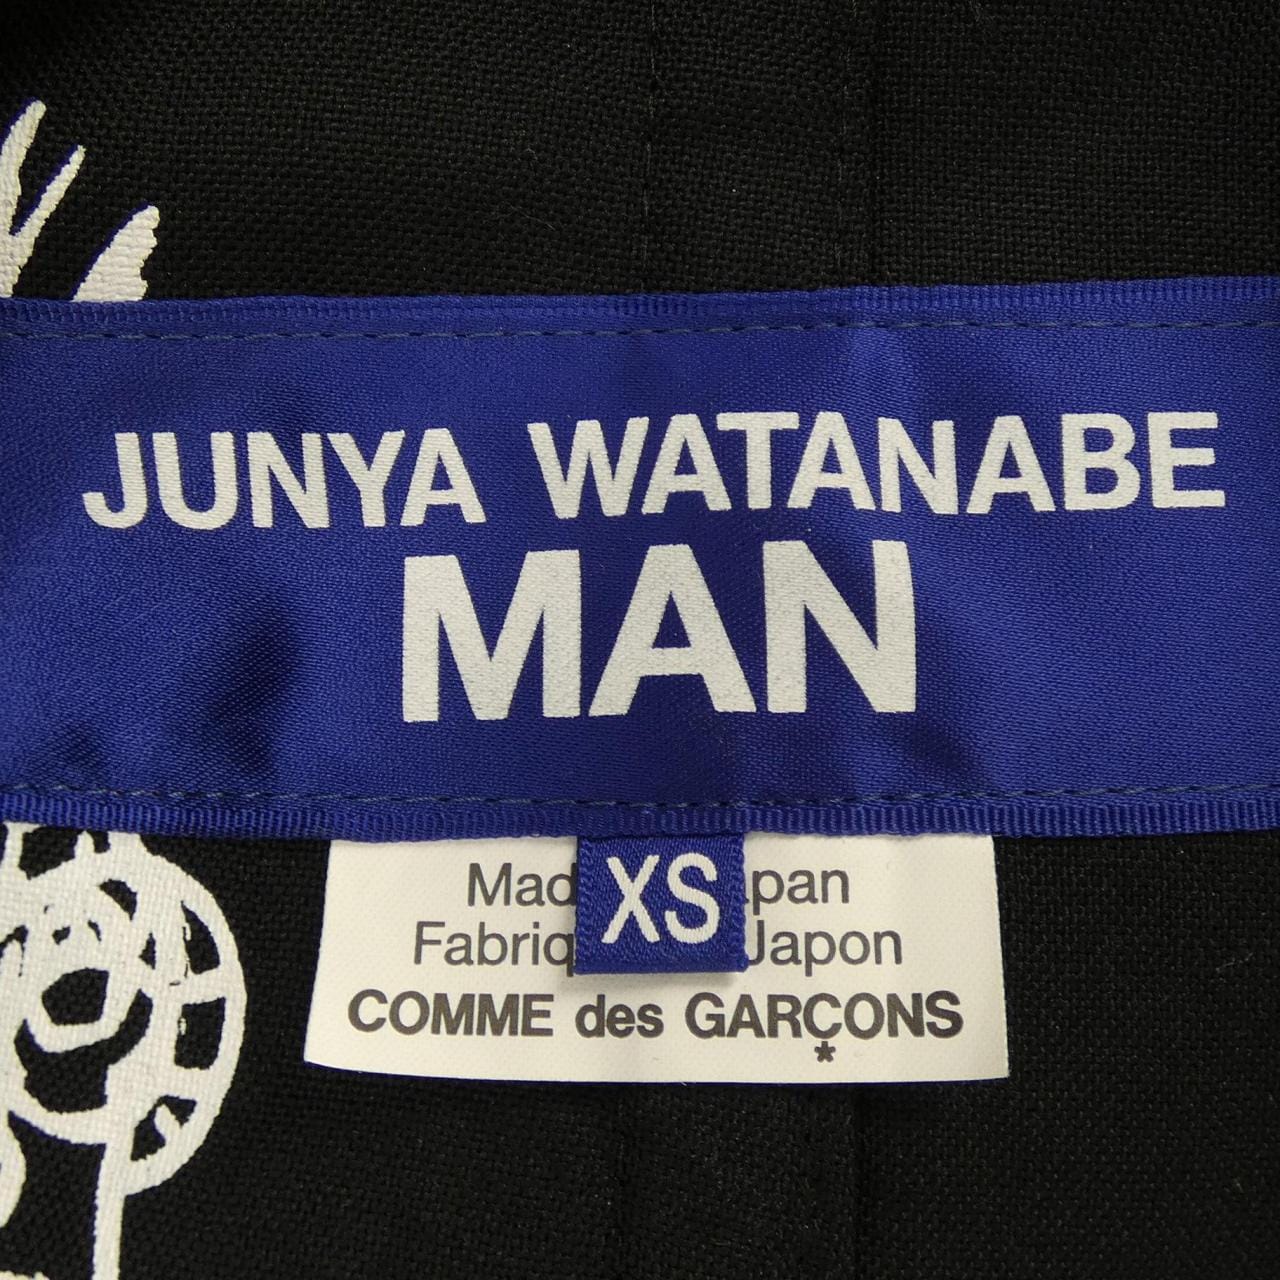 Junya Watanabeman JUNYA WATANABE MAN西装夹克